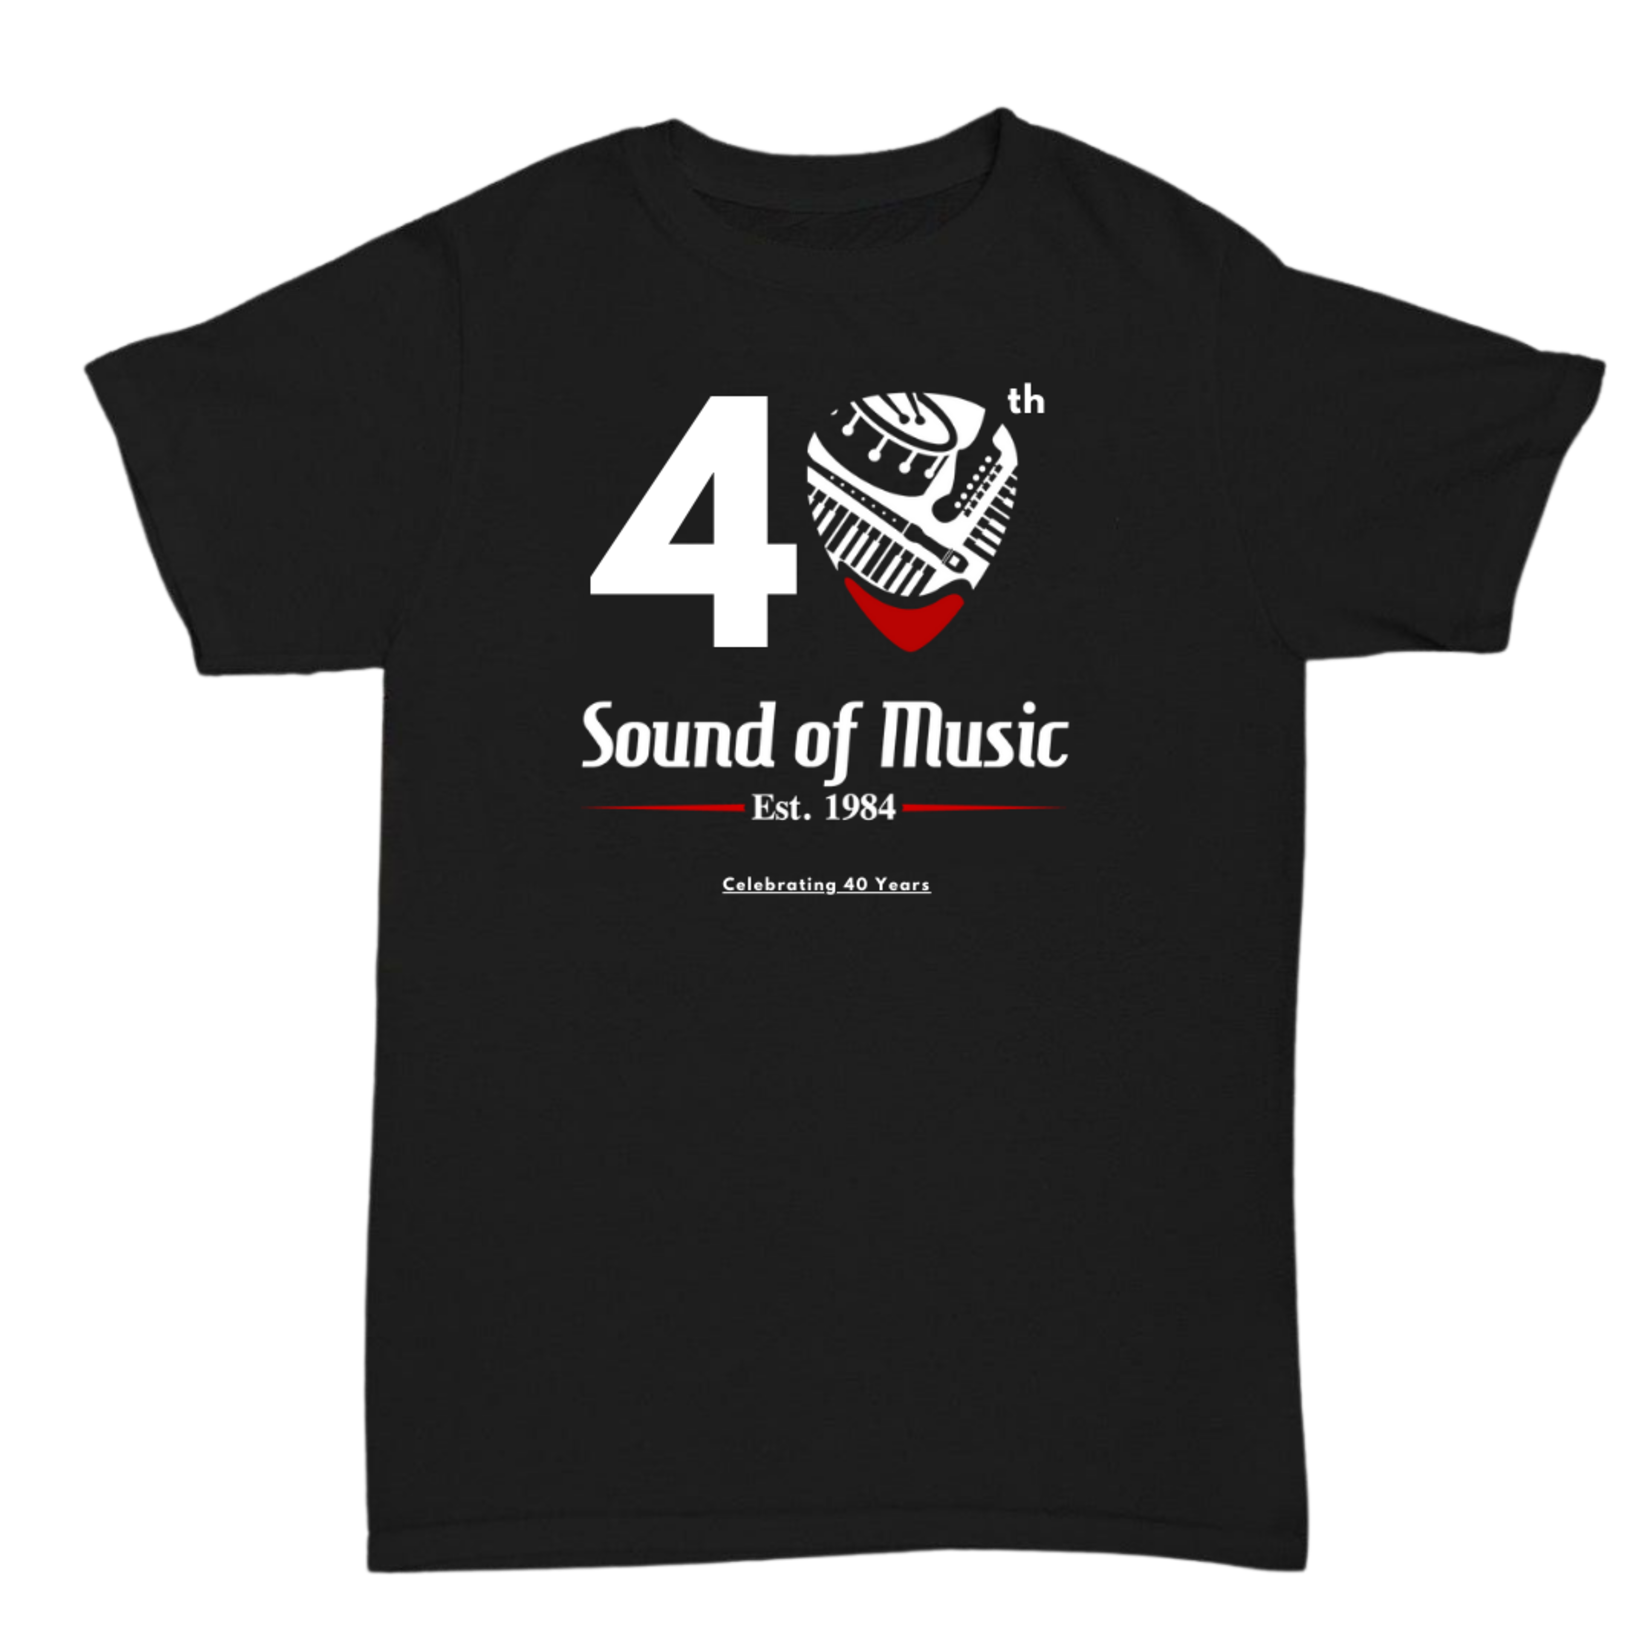 Sound of Music 40th Anniversary Shirt - Small